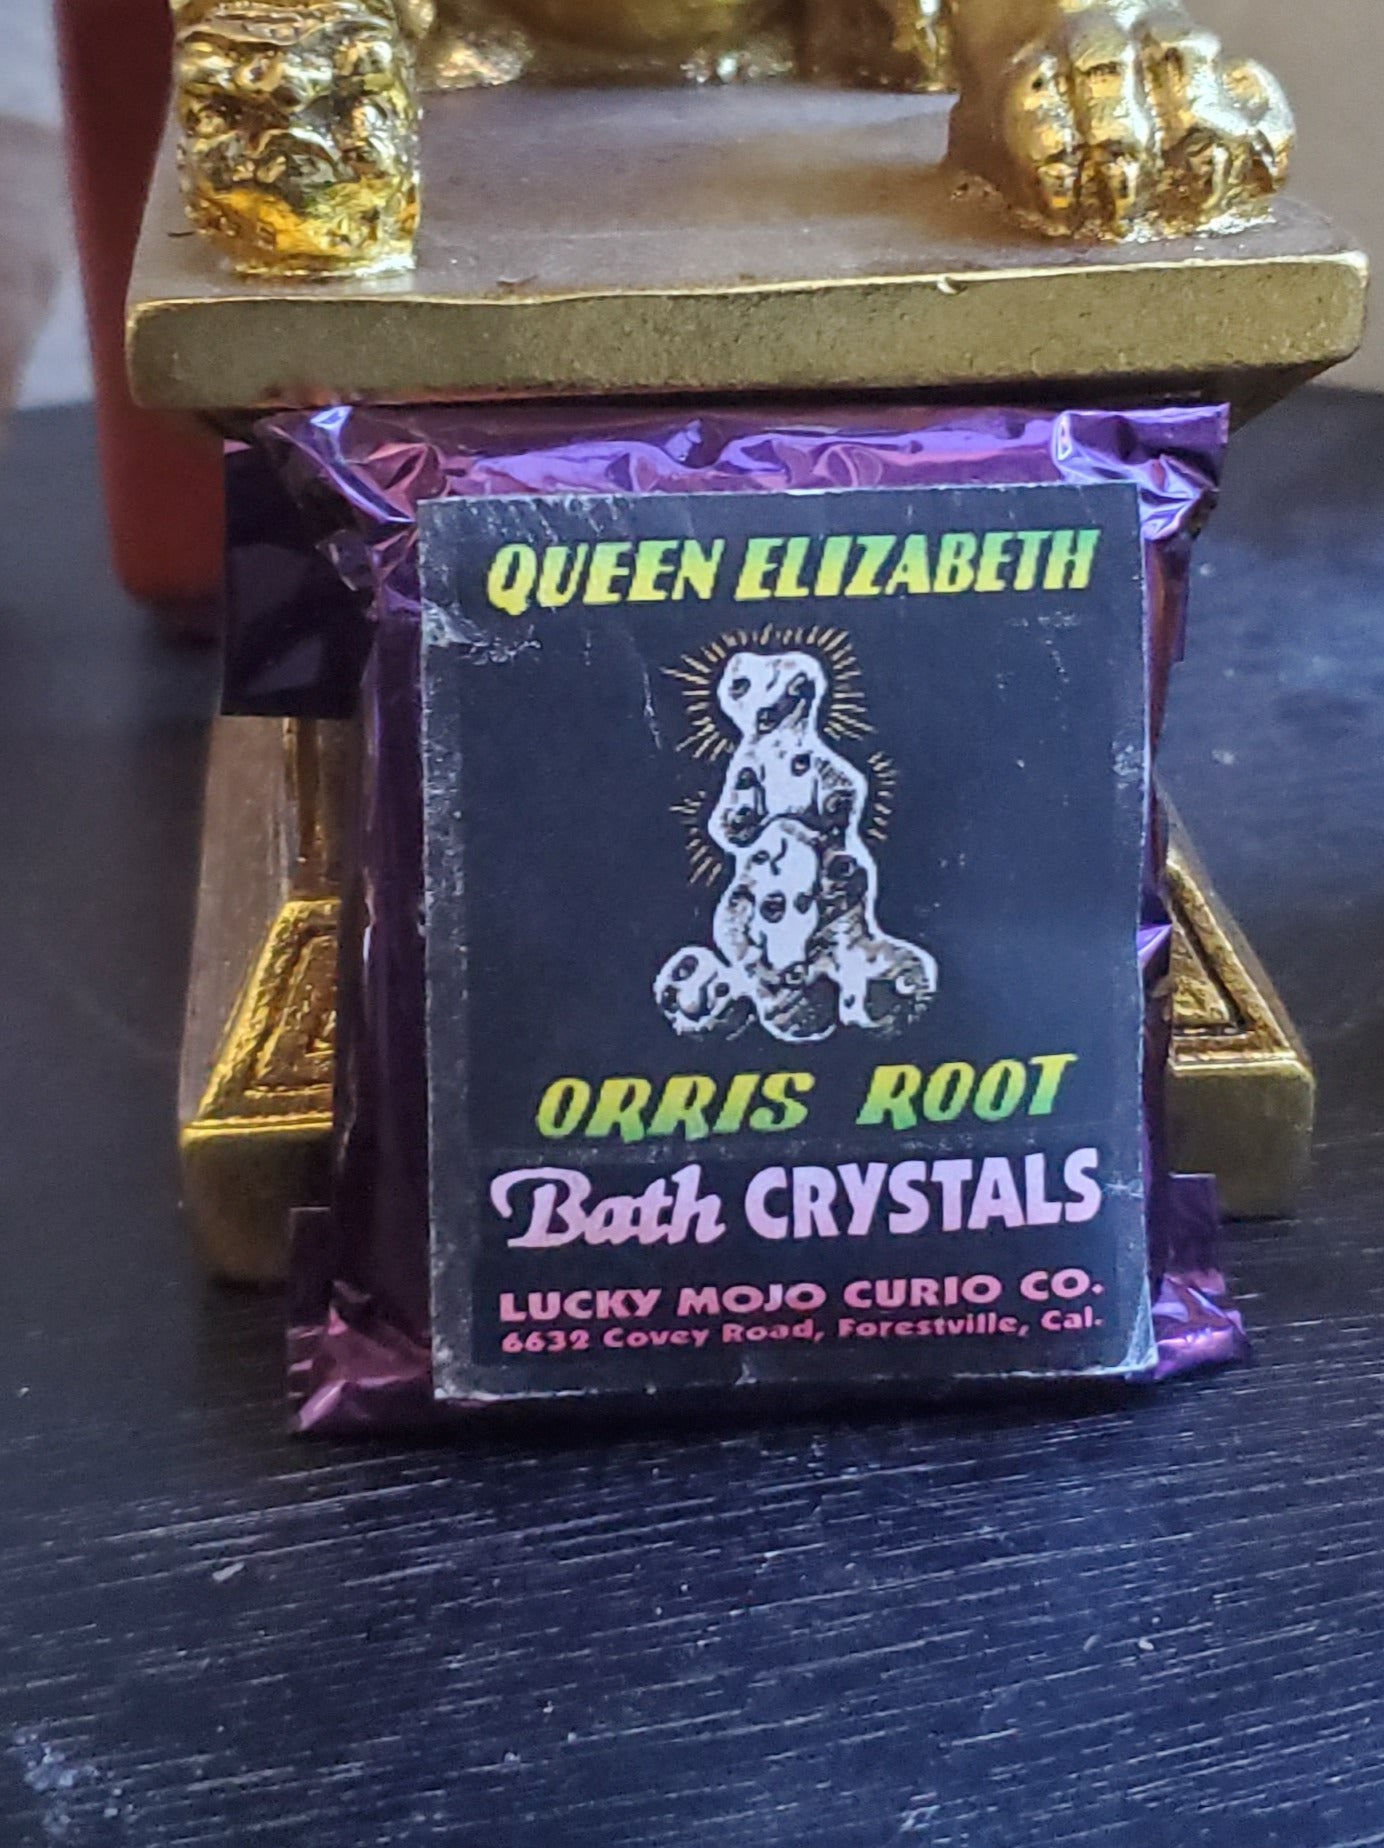 LuckyMojoCurioCo "Queen Elizabeth Orris Roots" Bath Crystals #Great Deal #BathCrystal #SpiritBath #CleansingRituals #RitualMagick